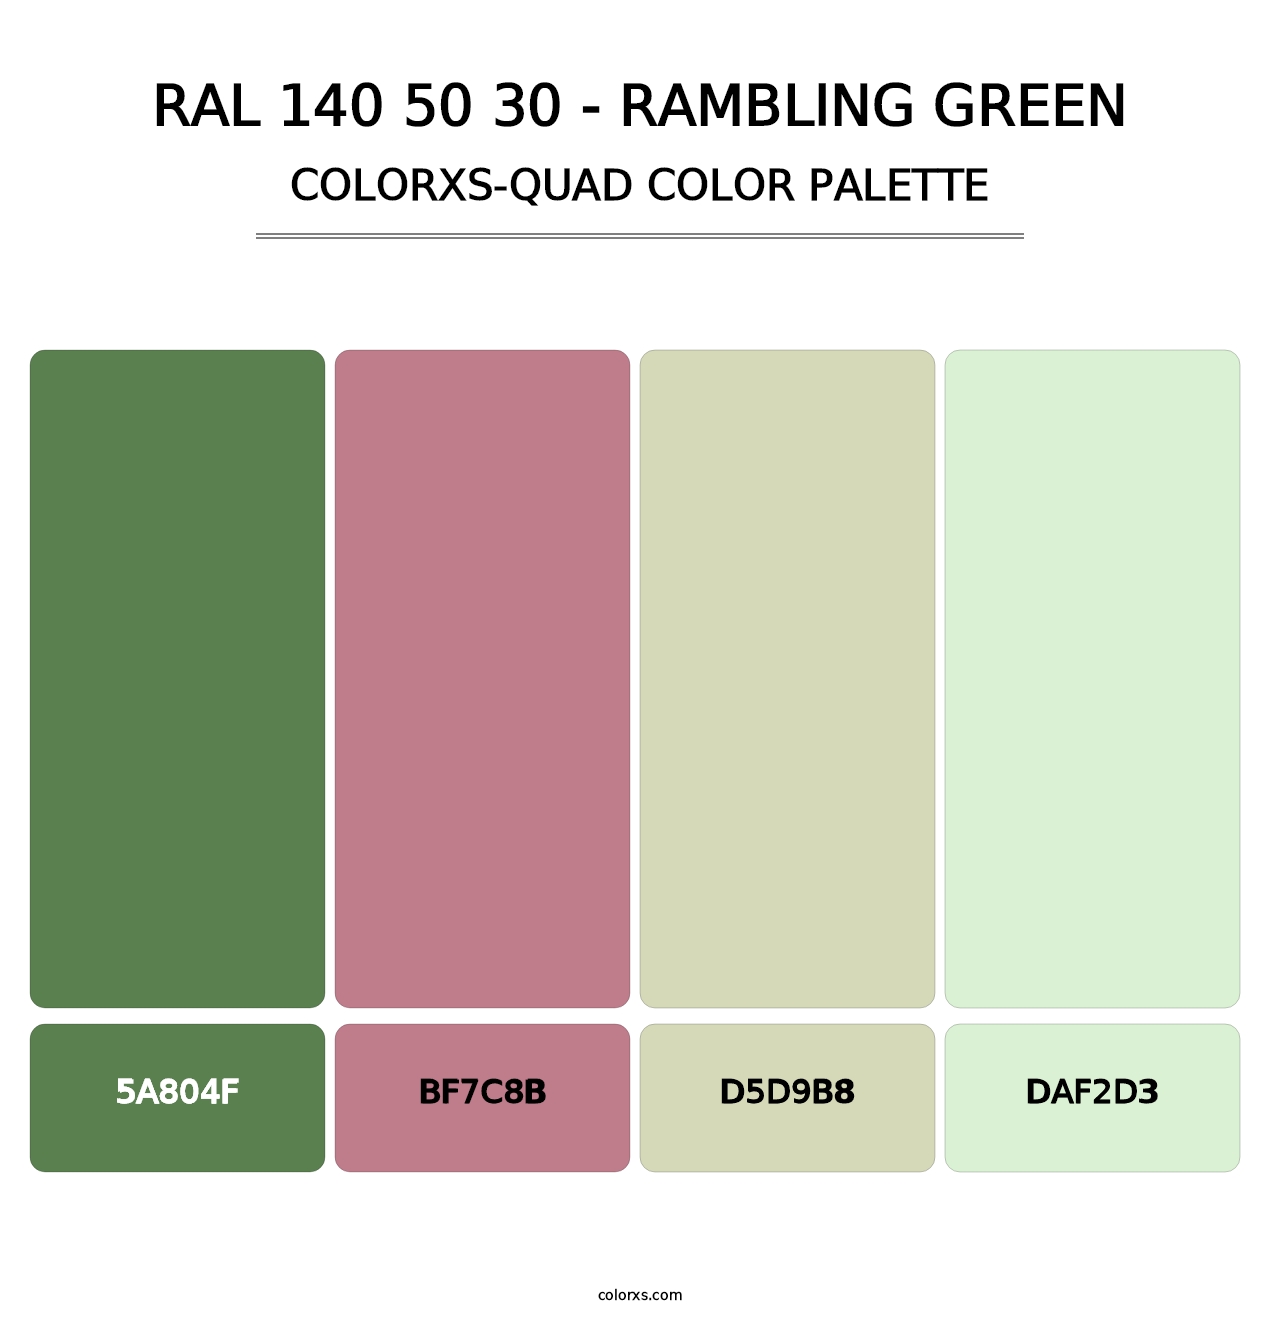 RAL 140 50 30 - Rambling Green - Colorxs Quad Palette